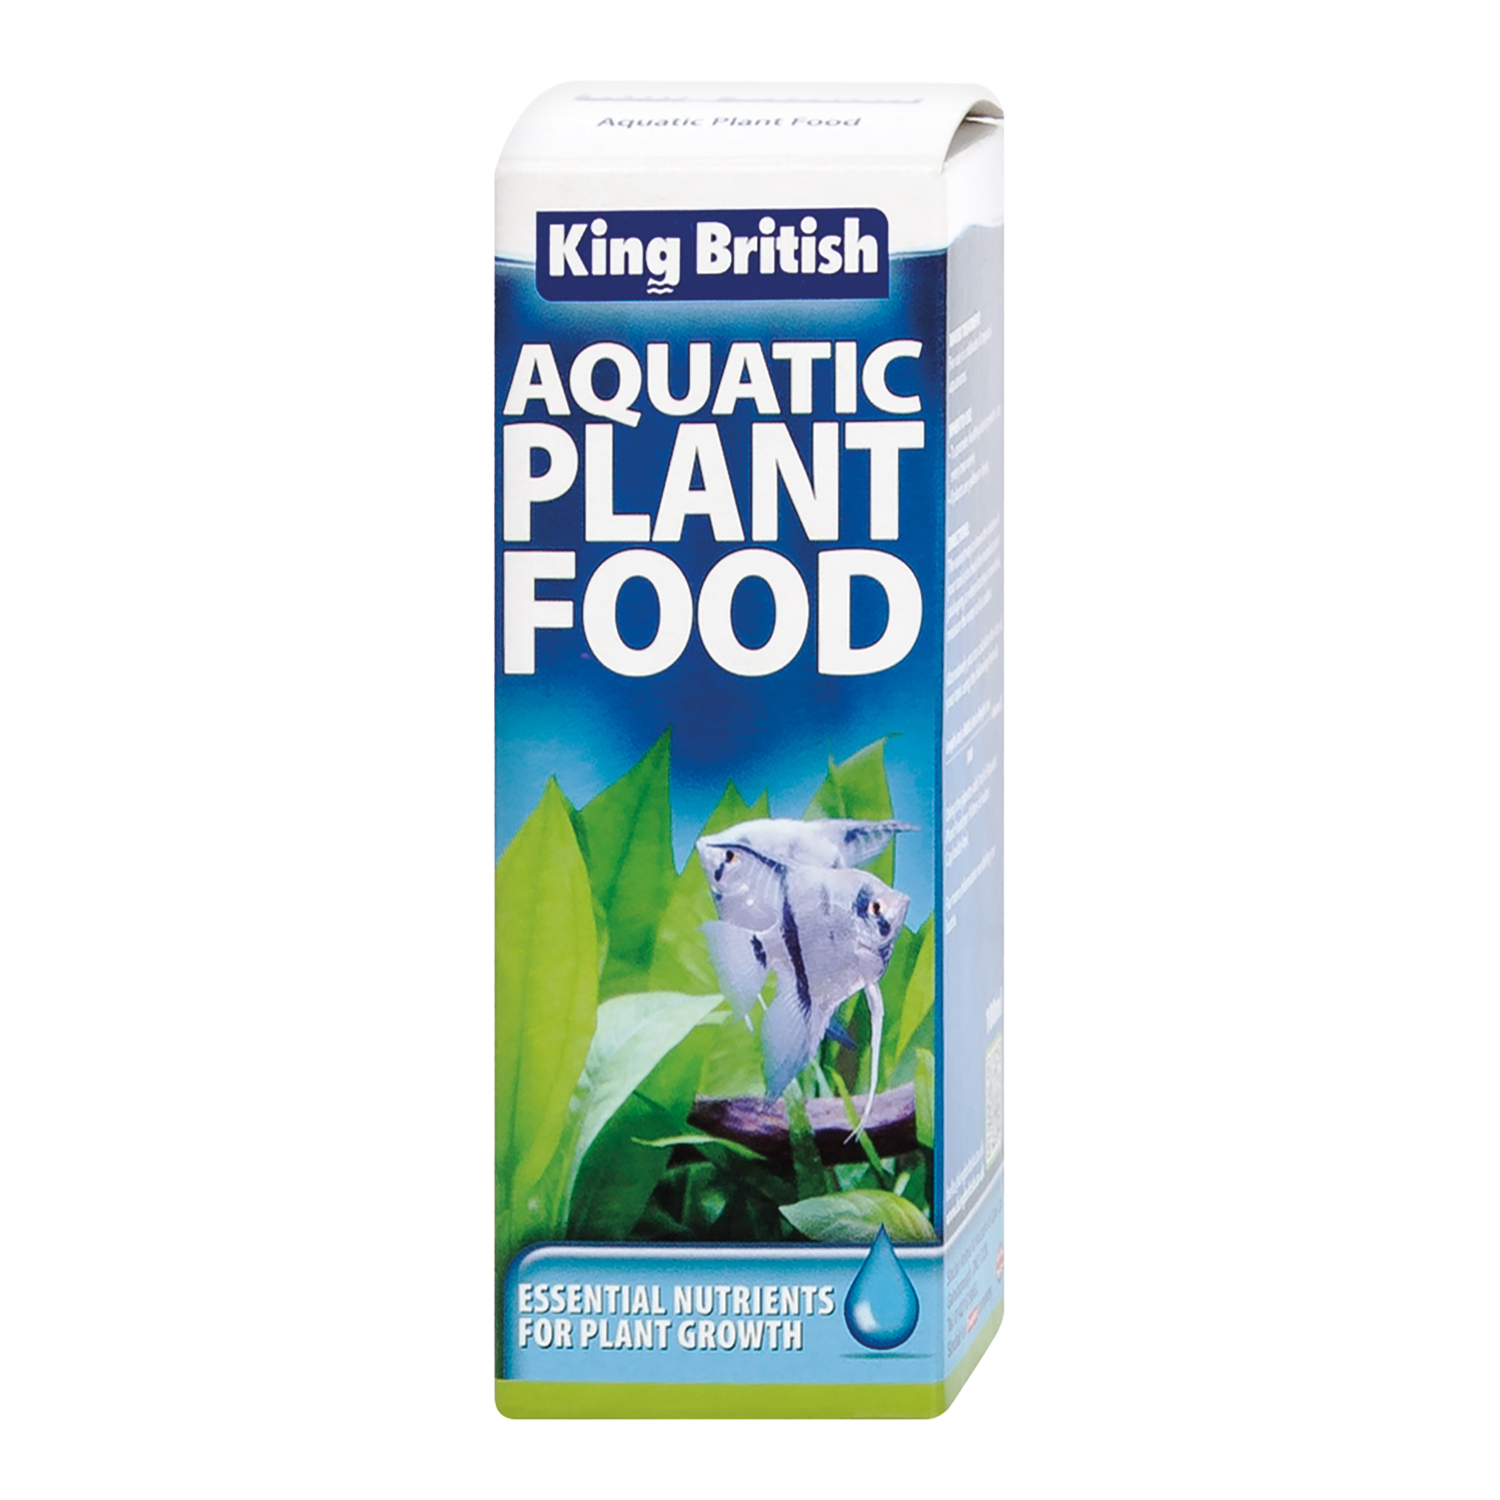 King British Aquatic Plant Food Image